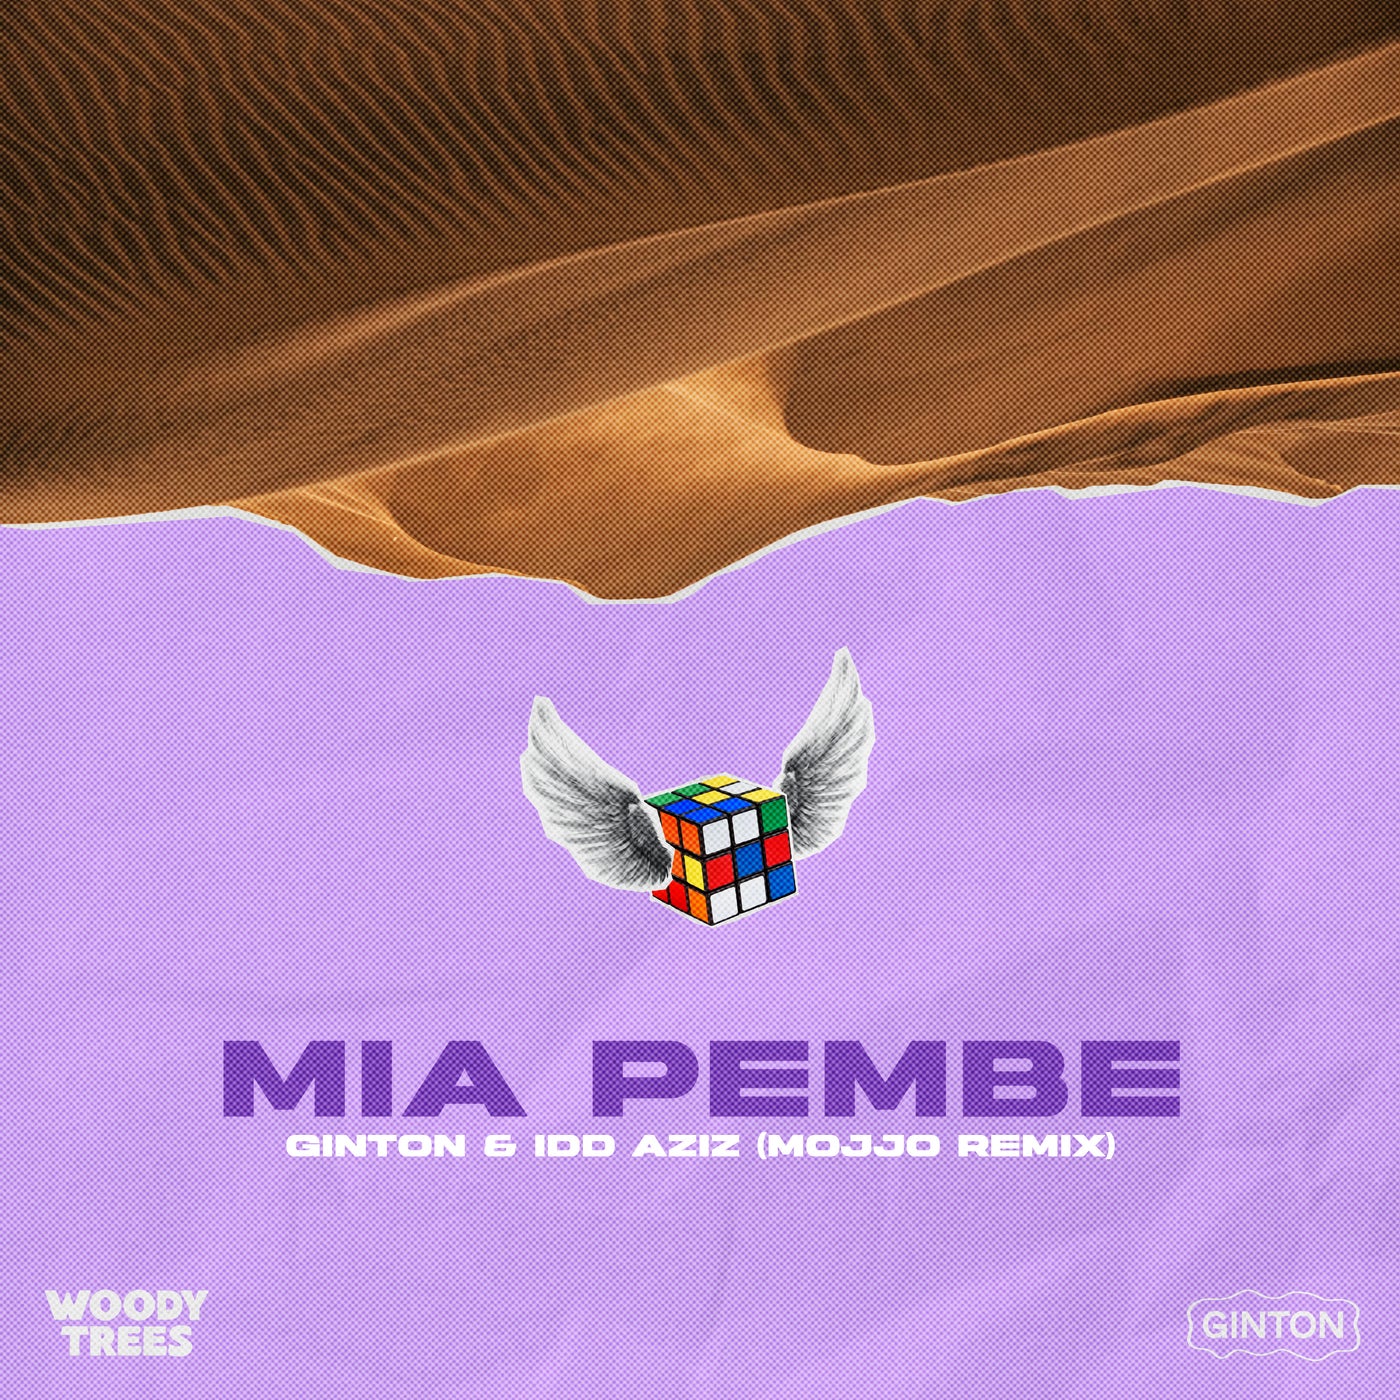 Idd Aziz, Ginton - Mia Pembe (Mojjo Remix Extended Version) on Woody Trees